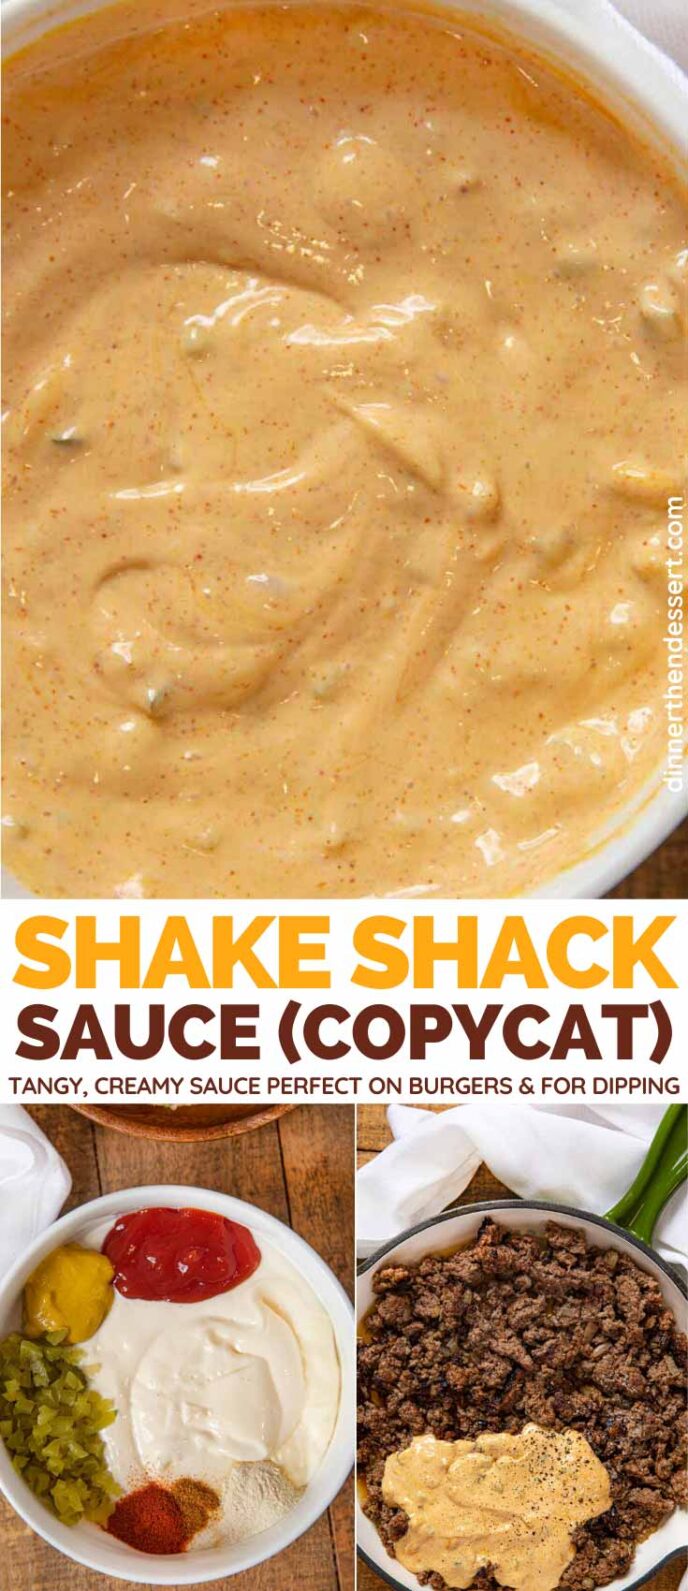 Shake Shack Sauce Copycat collage